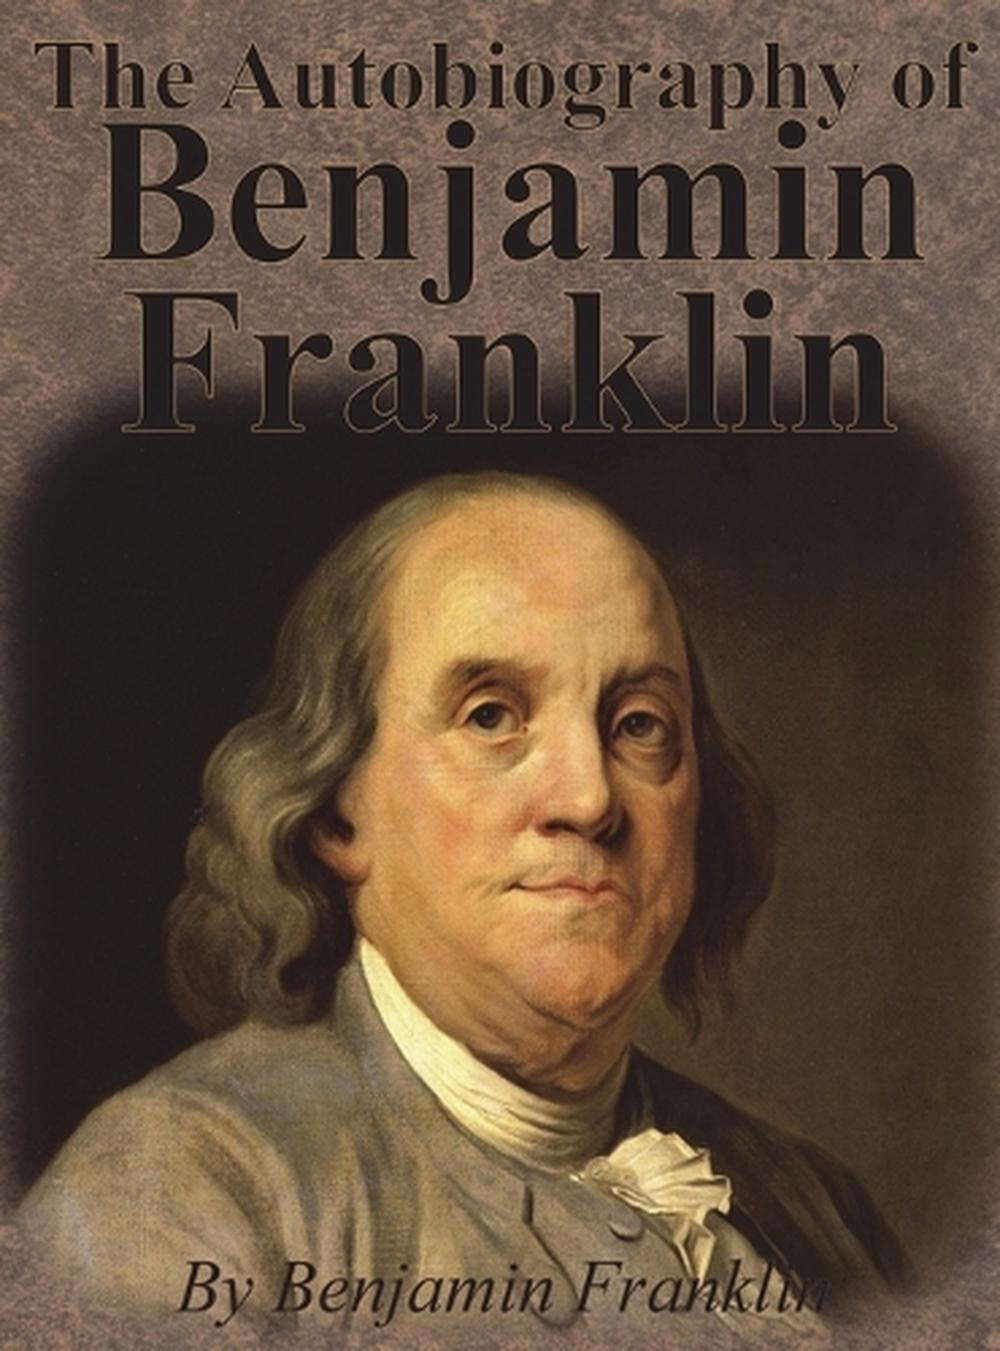 autobiography of benjamin franklin purpose